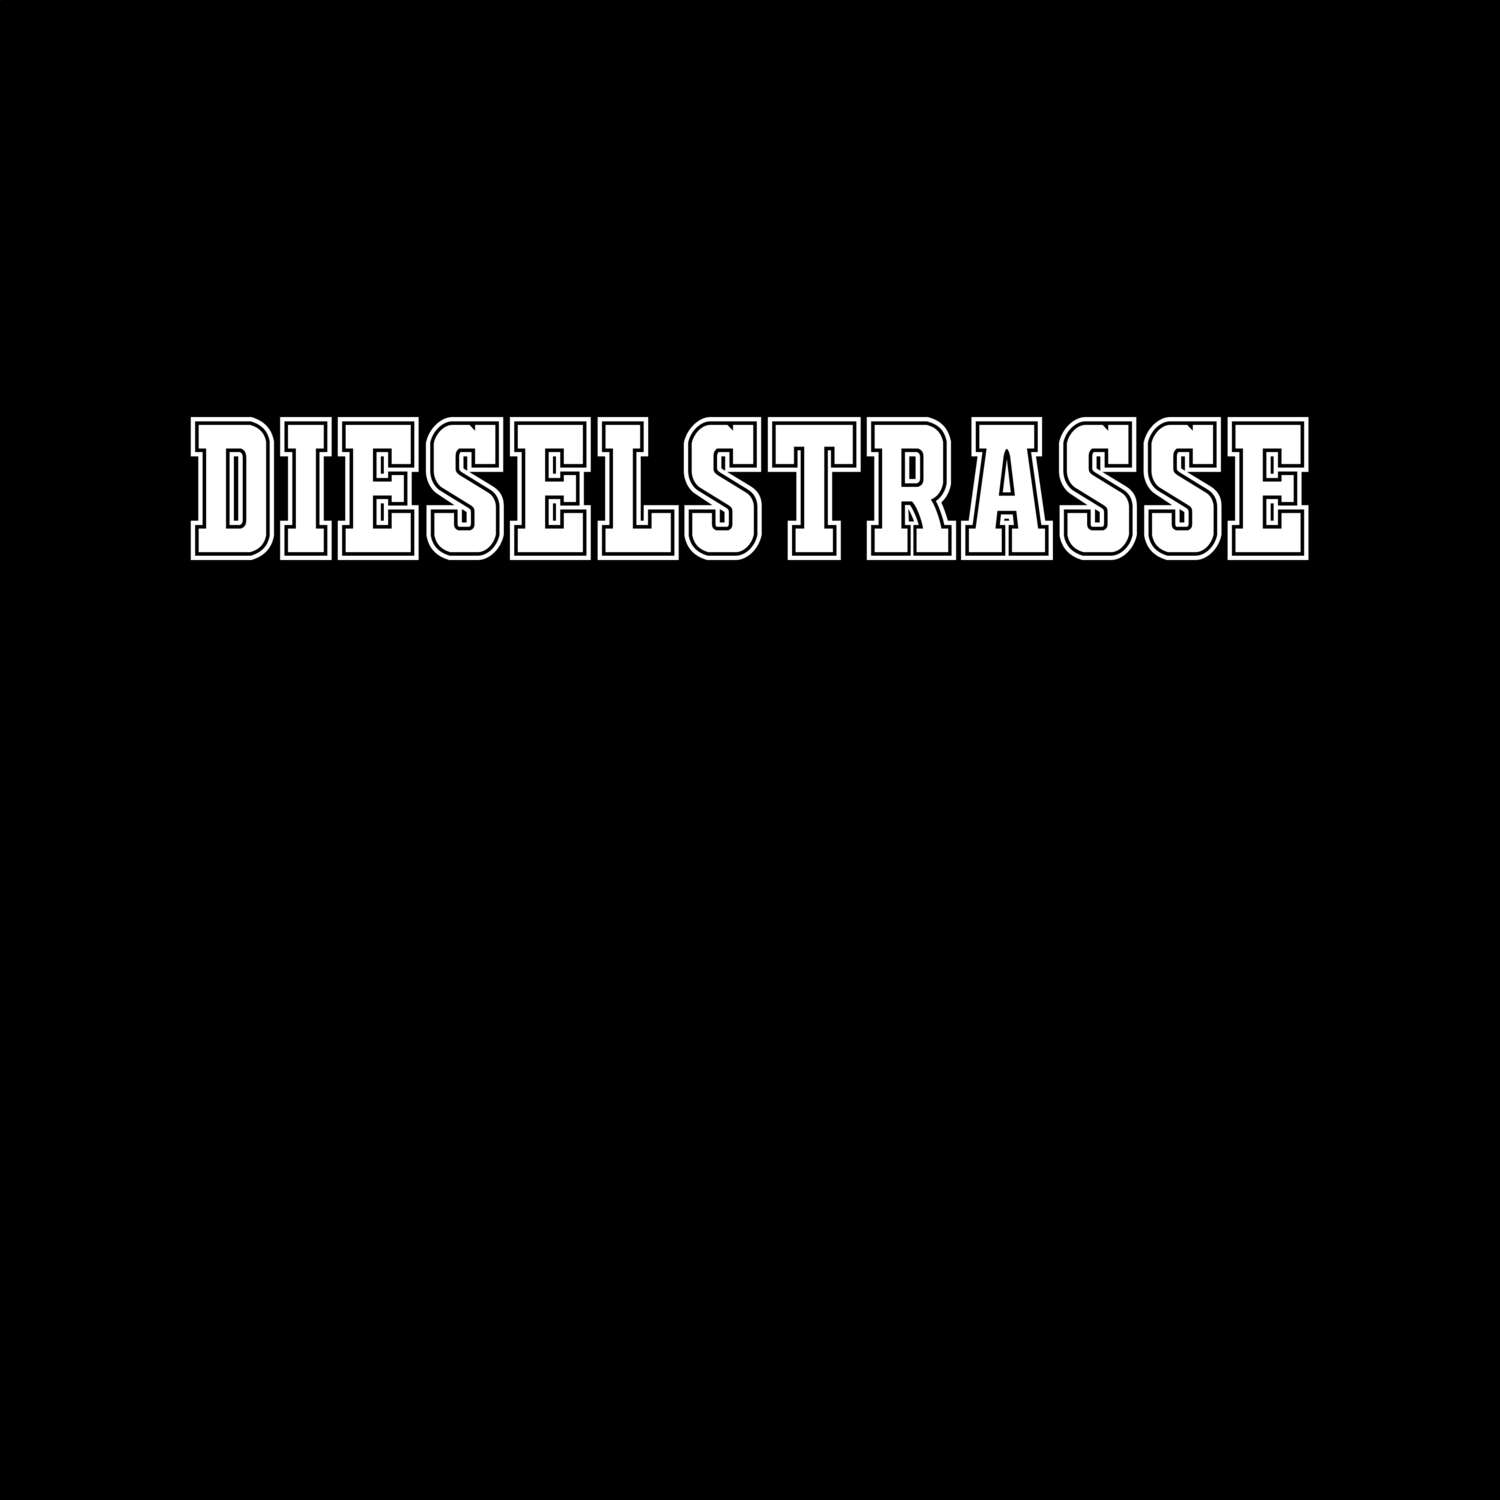 Dieselstraße T-Shirt »Classic«